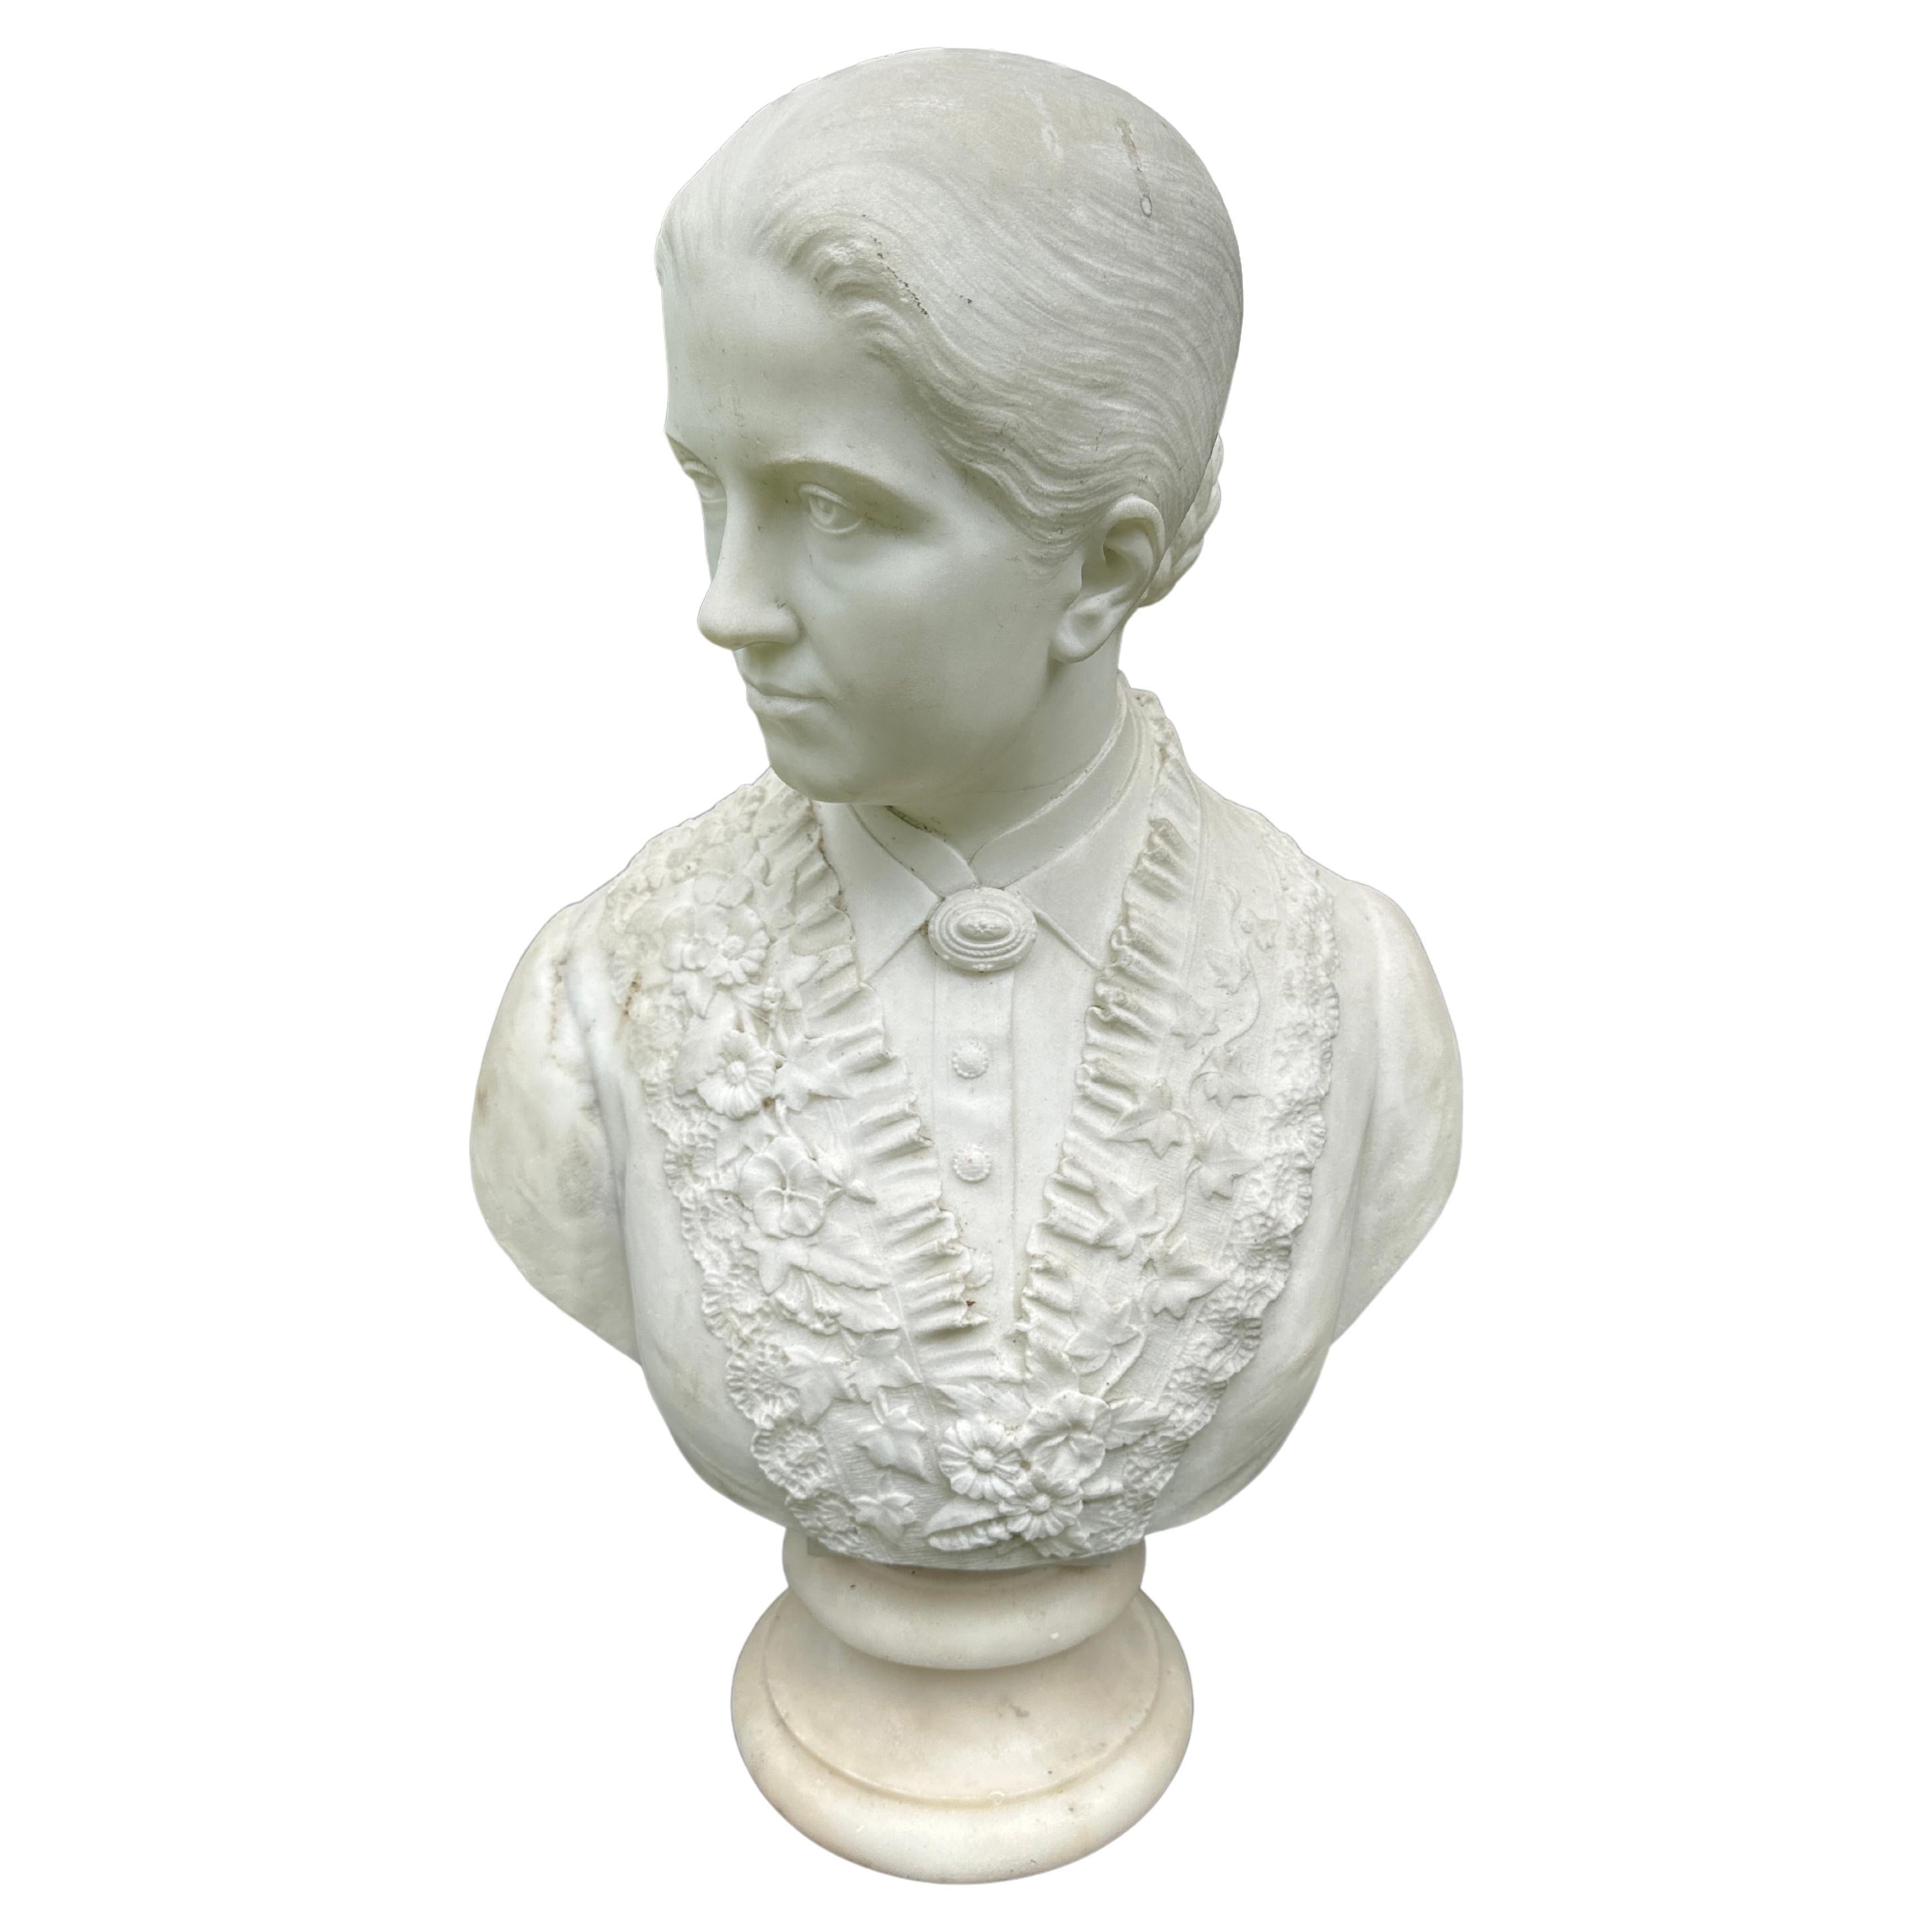 An elegant bust of a lady